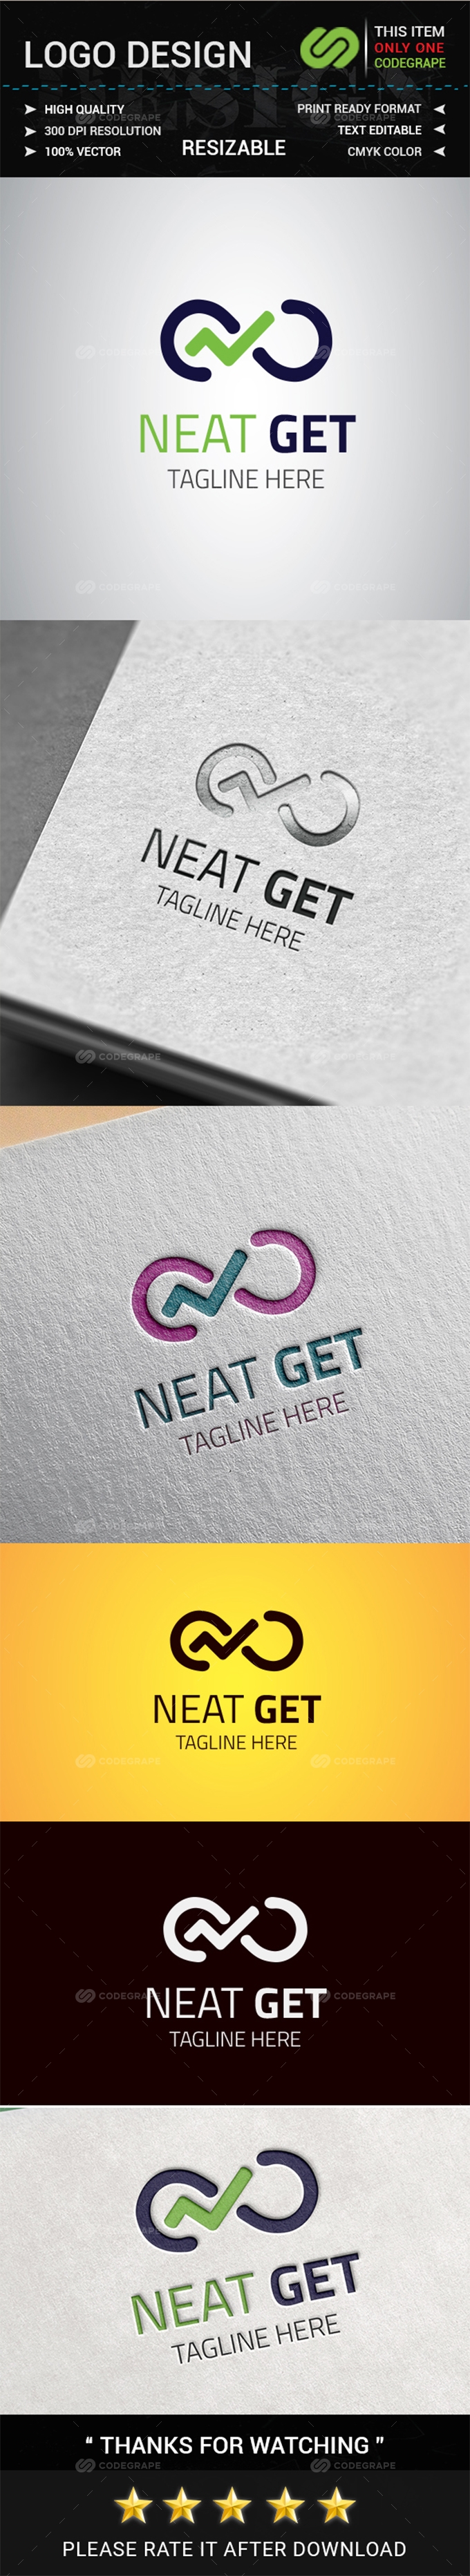 Neat Get Logo Design